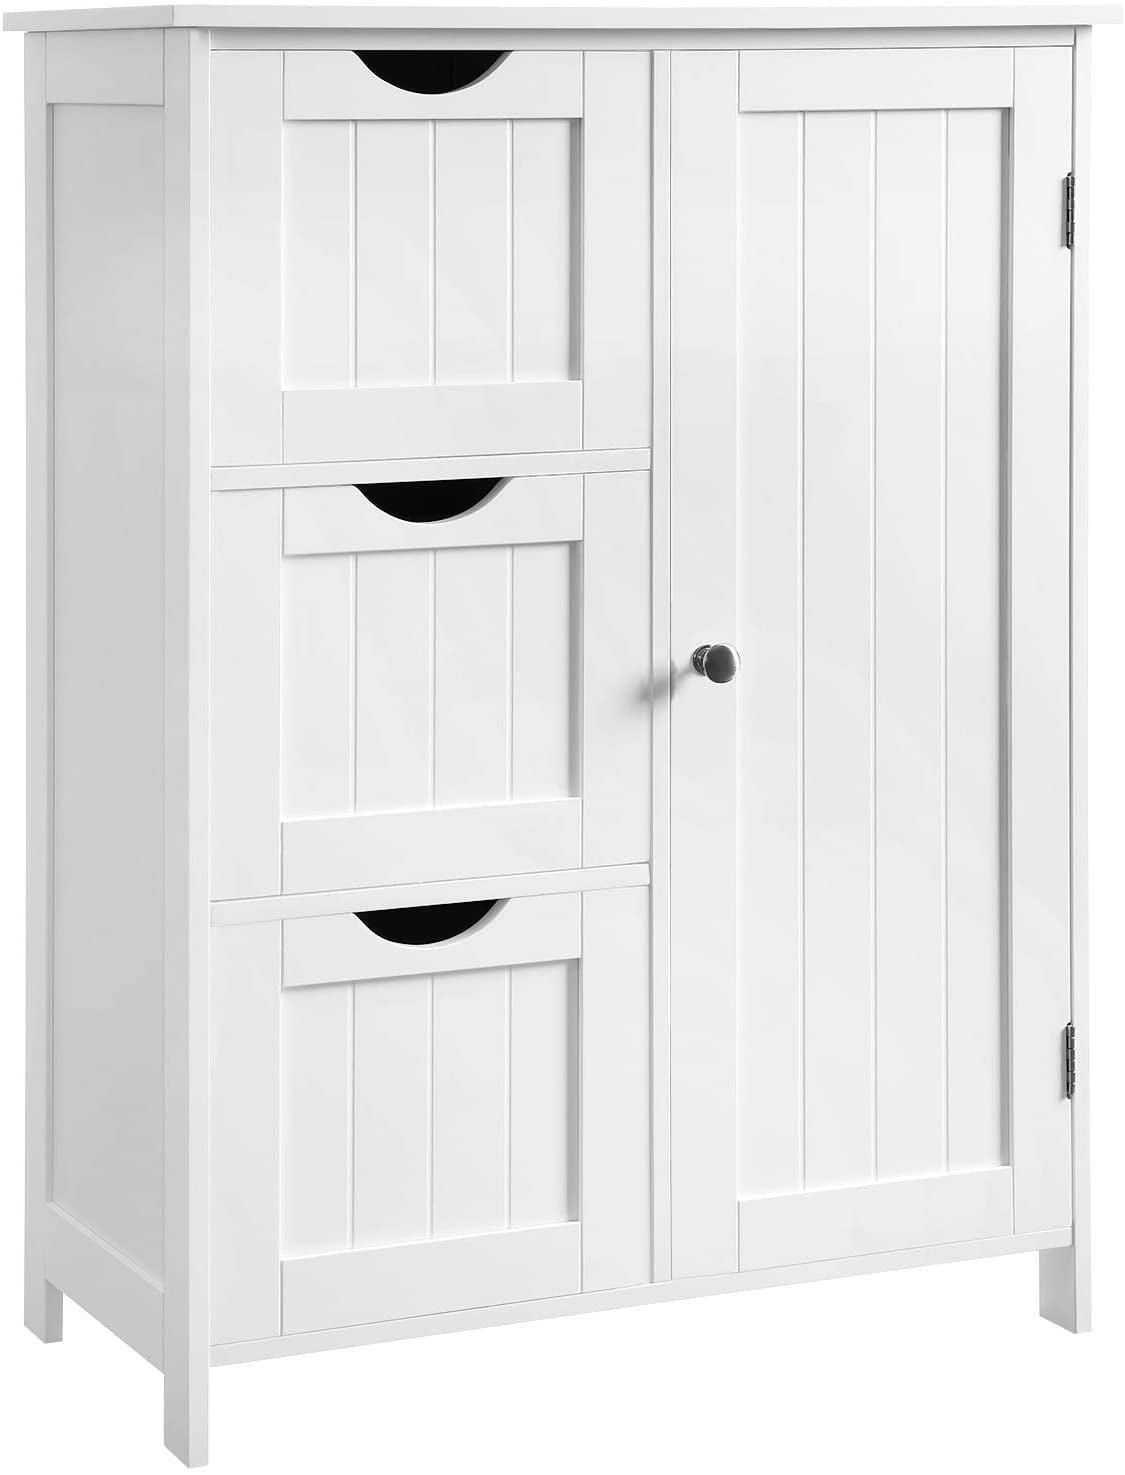 IKayaa Modern Shelved Floor Cabinet With Door & Drawers Storage Furniture R7Y9 